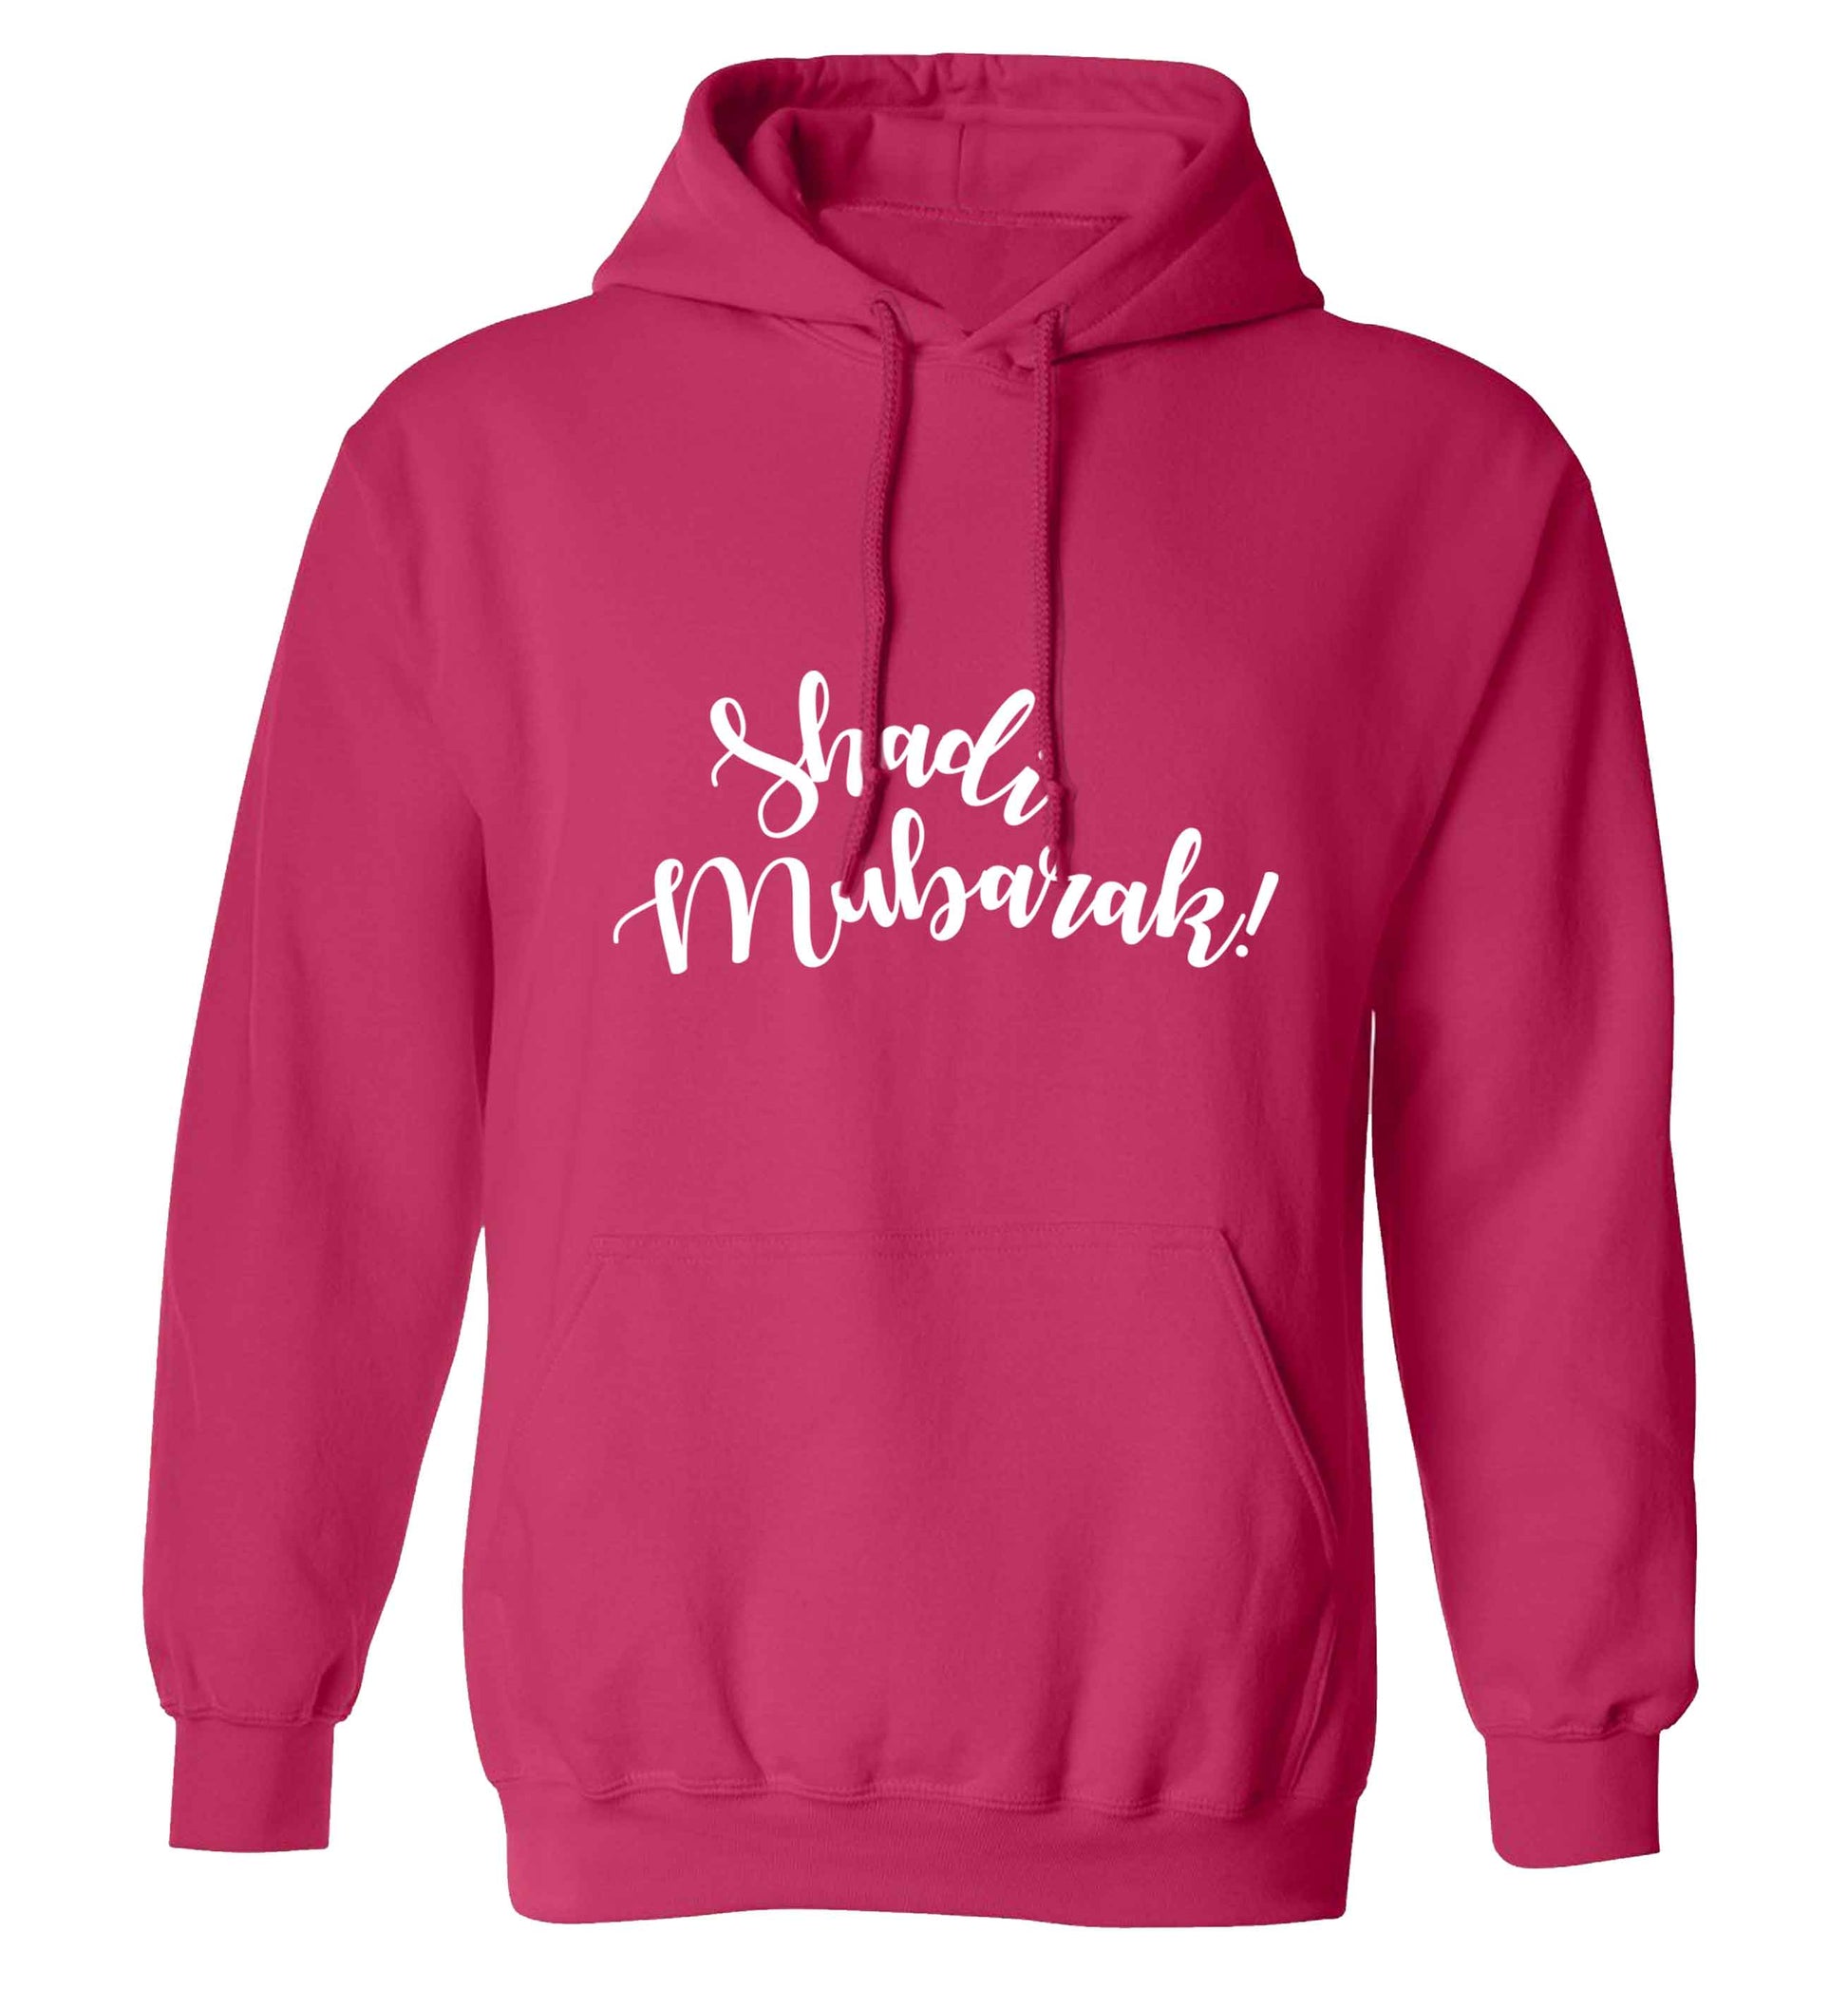 Shadi mubarak adults unisex pink hoodie 2XL